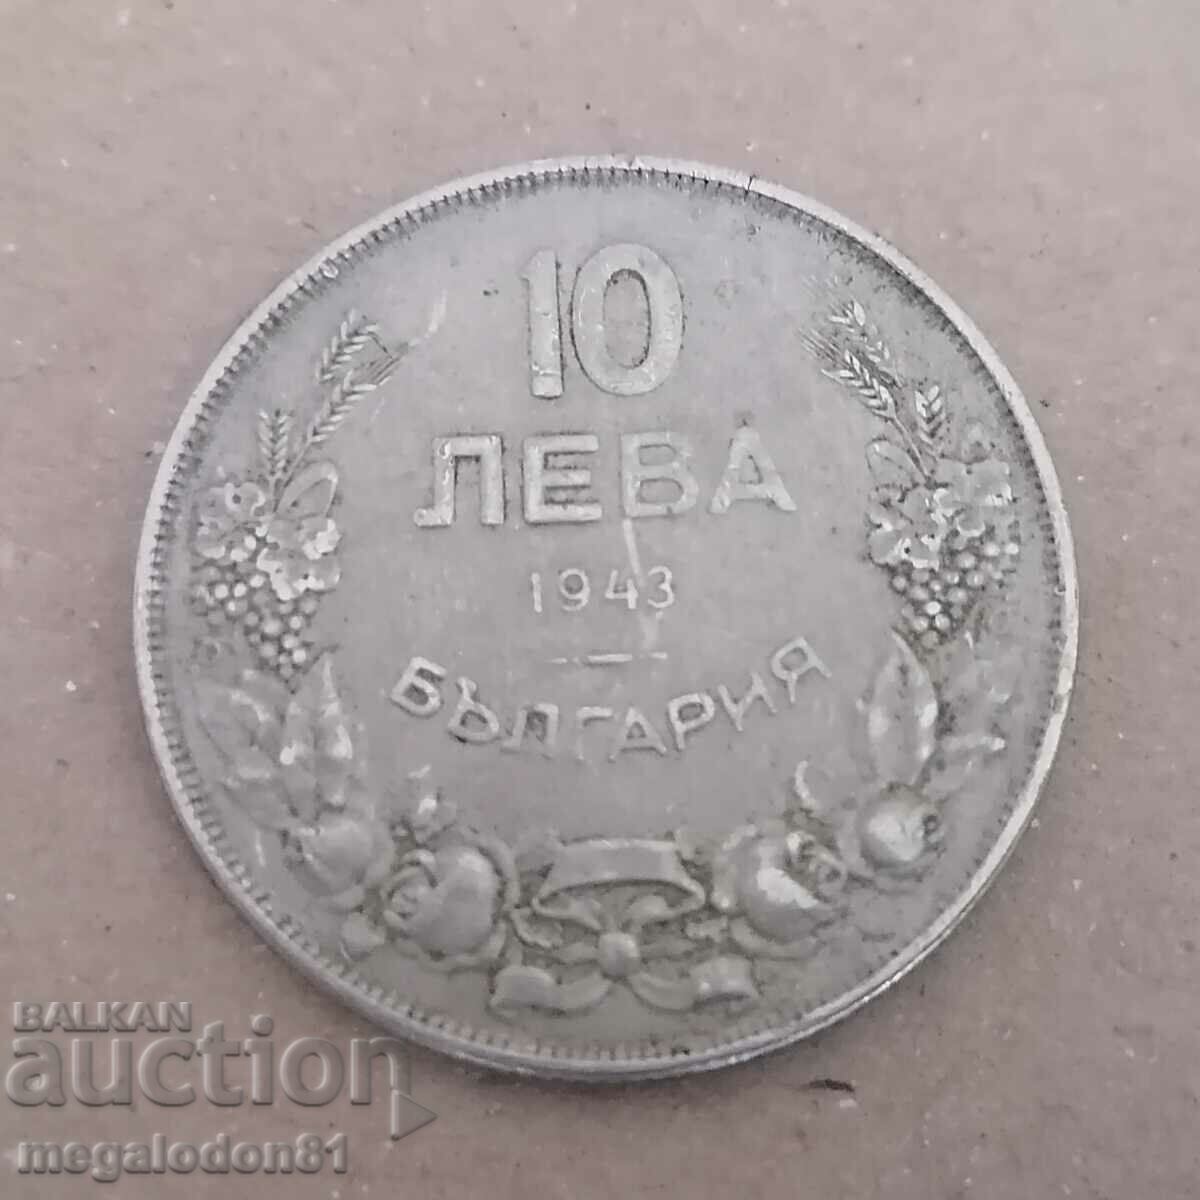 Bulgaria - BGN 10, 1943